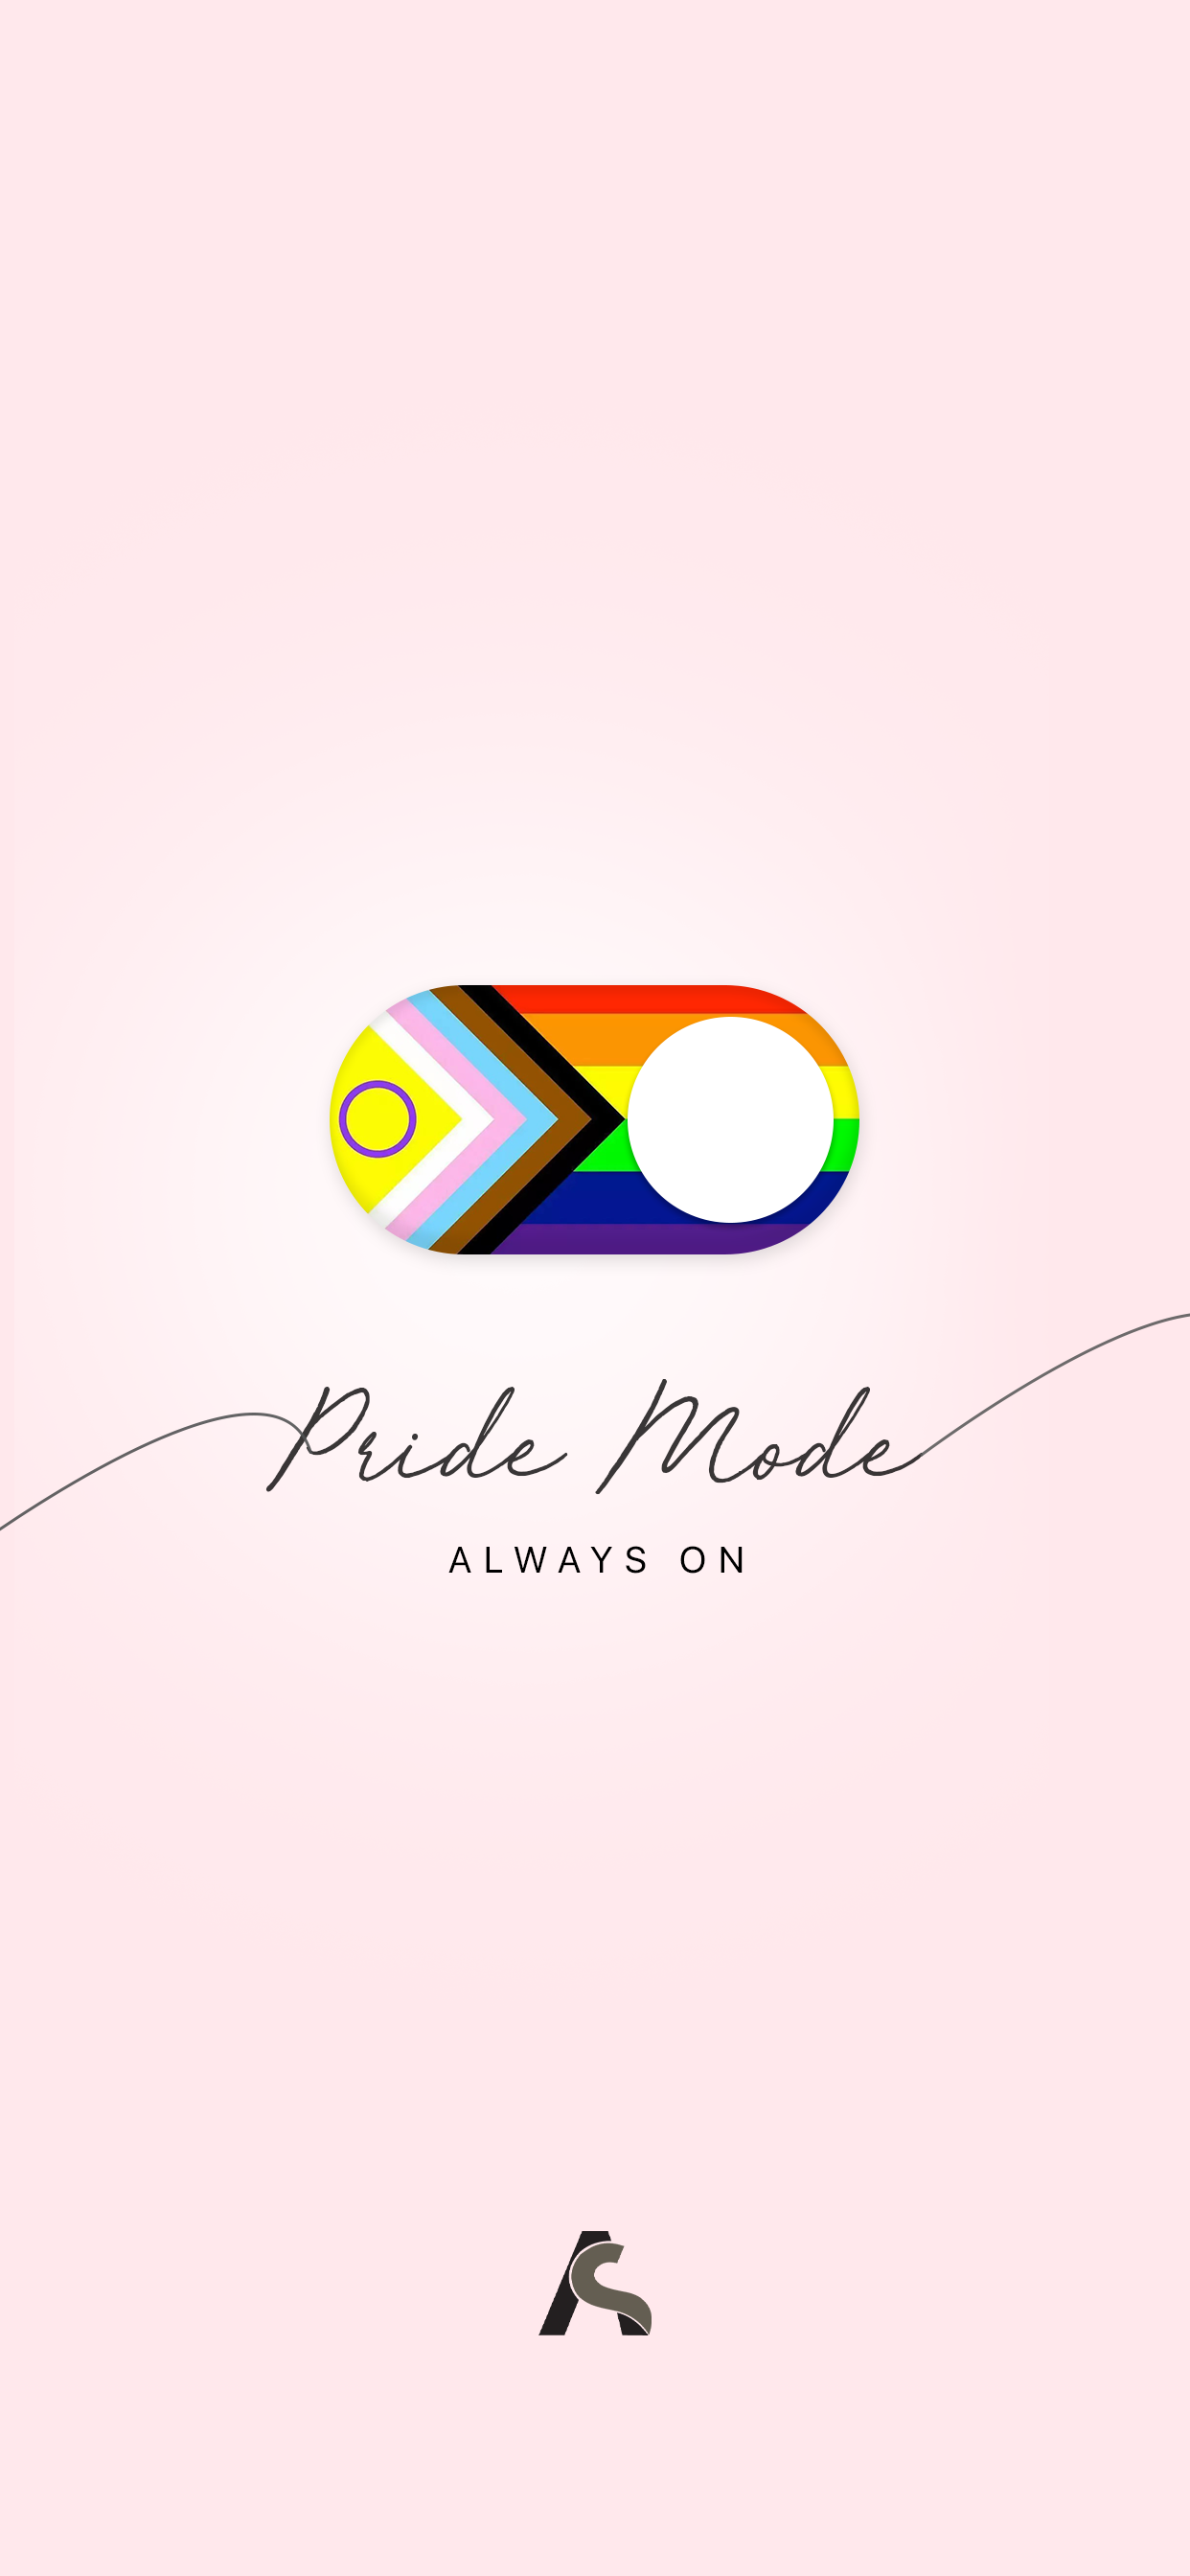 Pride Mode iPhone Wallpaper Free Download